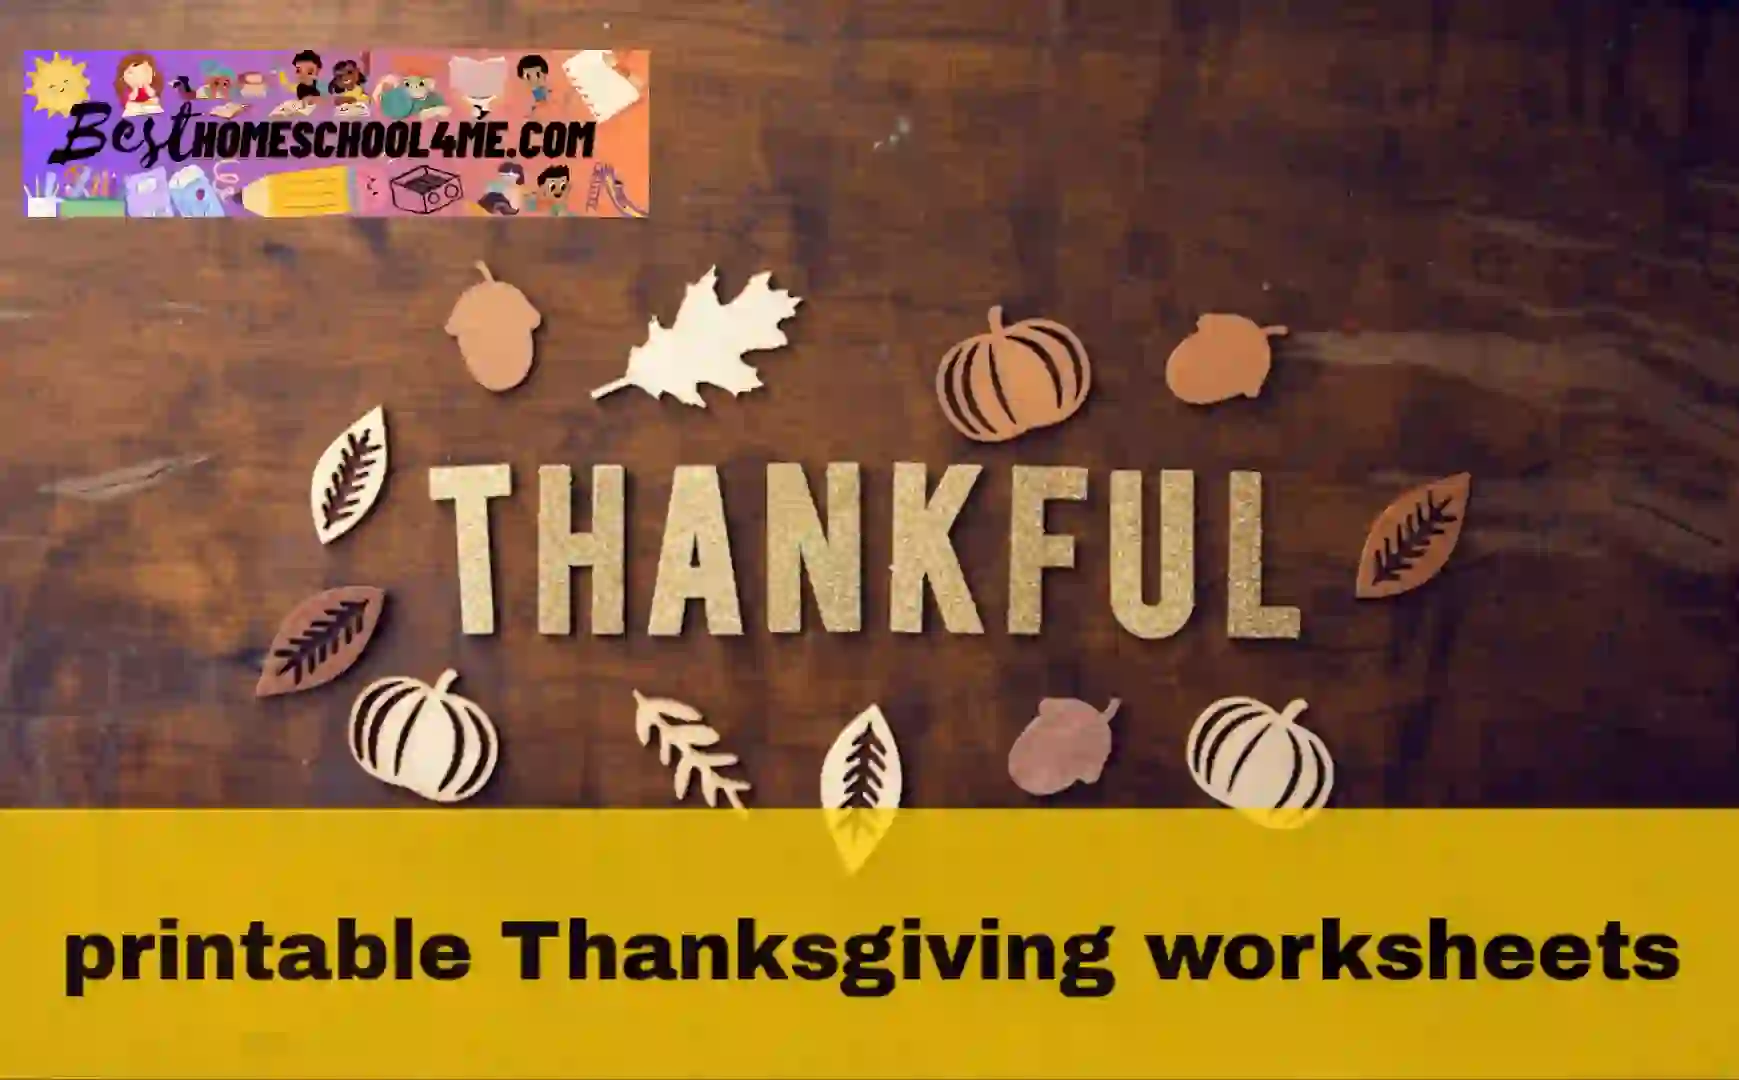 un thanksgiving worksheets for kids, children's thanksgiving worksheets printable, church thanksgiving worksheets for kids